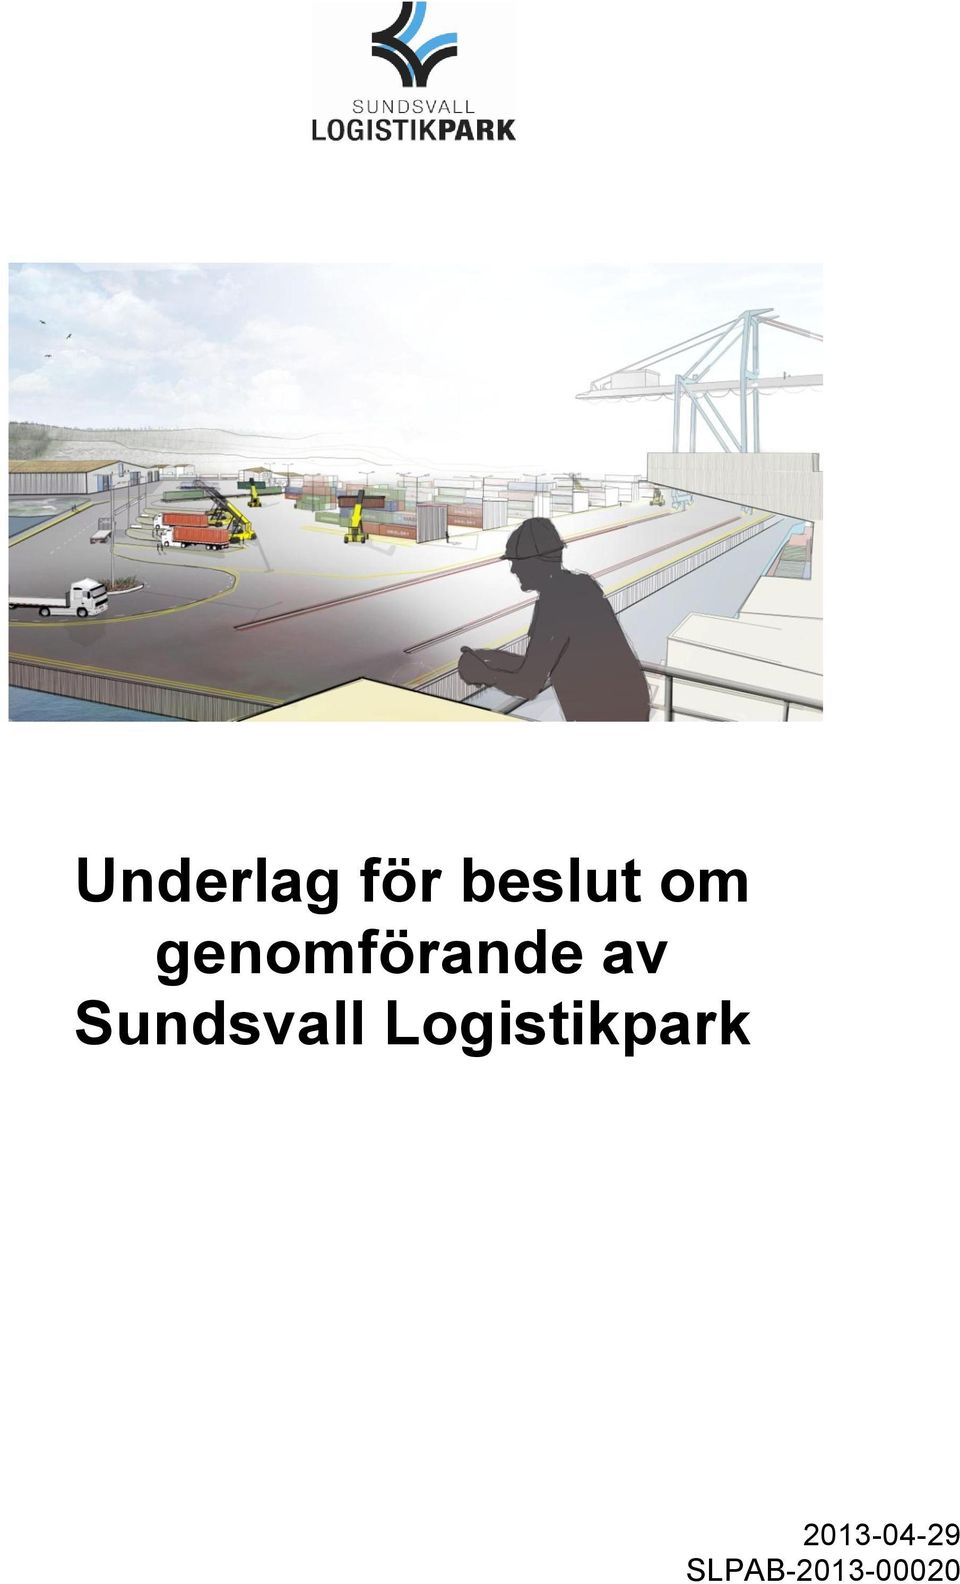 Sundsvall Logistikpark